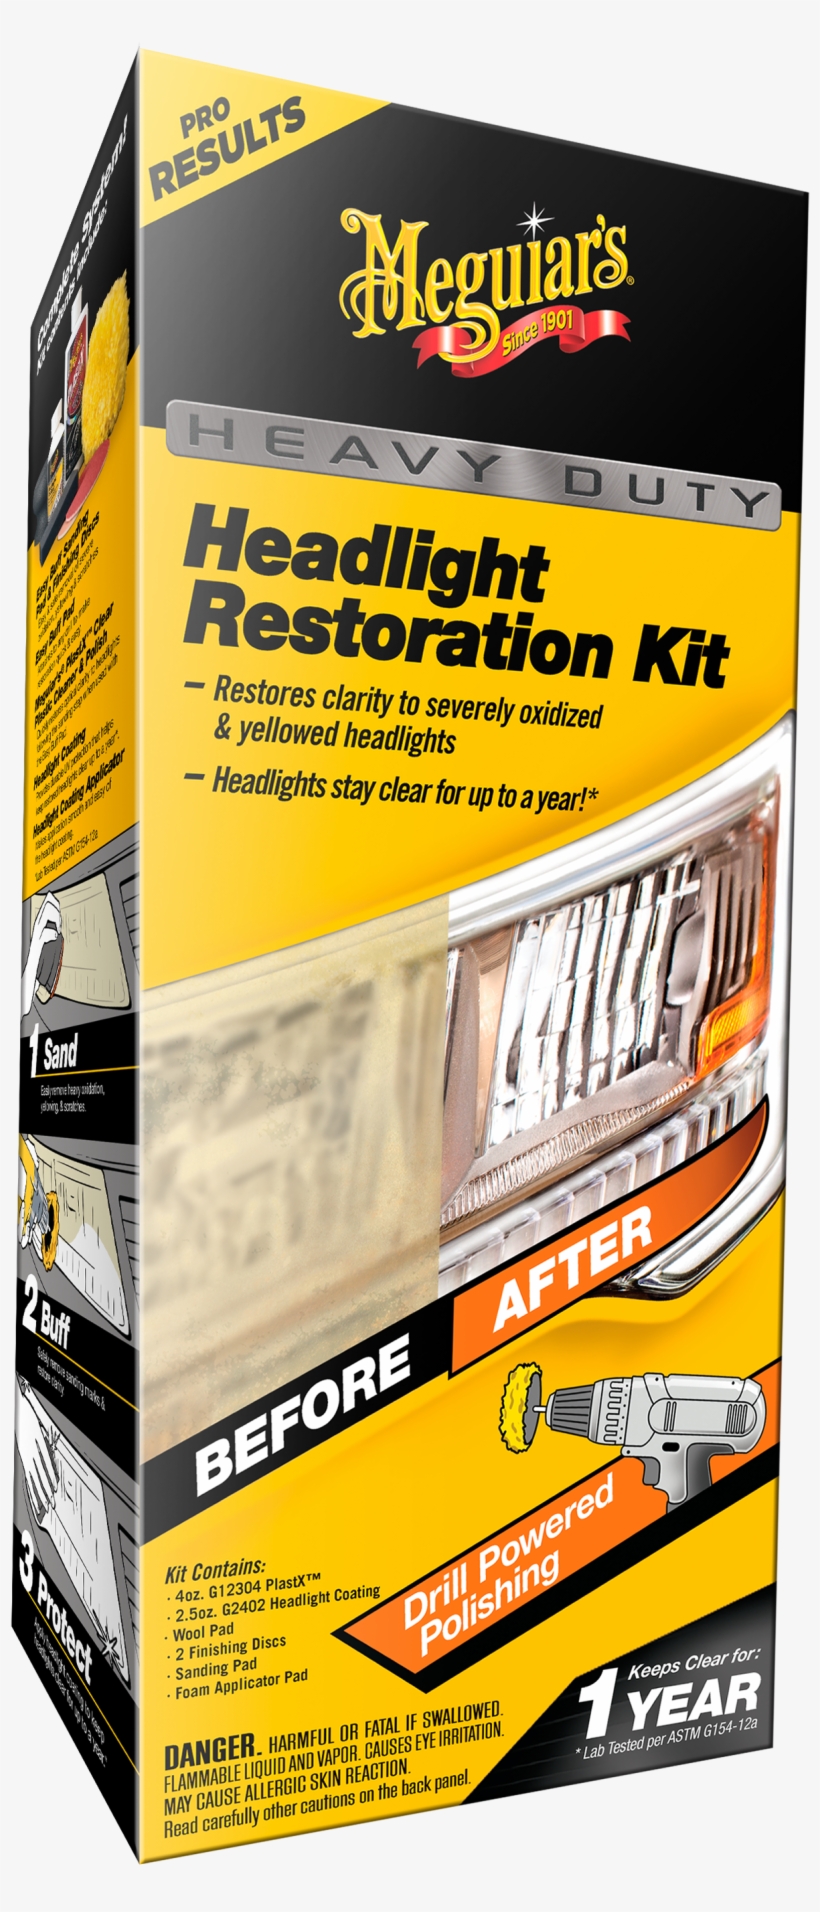 Meguiar's® Heavy Duty Headlight Restoration Kit - Meguiar's G2960 Basic Headlight Restoration Kit, transparent png #2128704